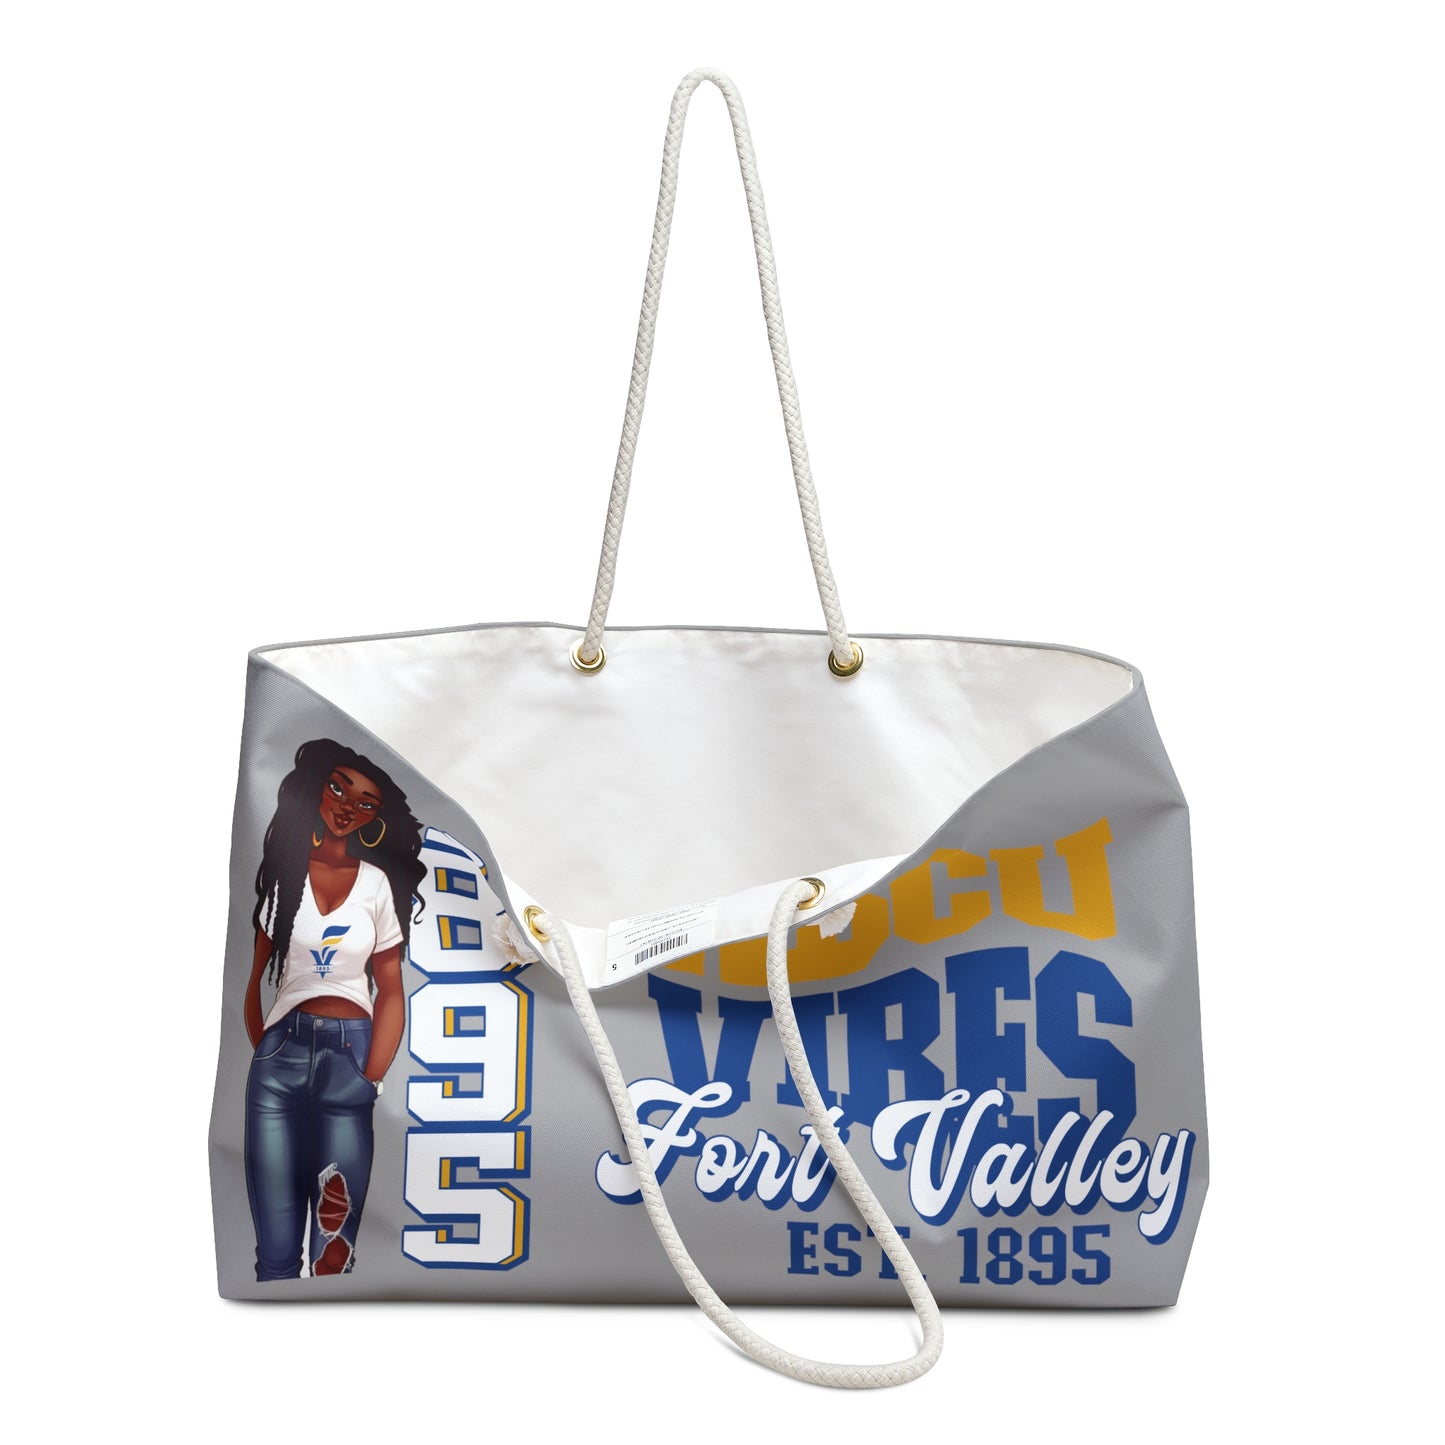 HBCU Love (Fort Valley State University HBCU Vibe/ Weekender Bag)